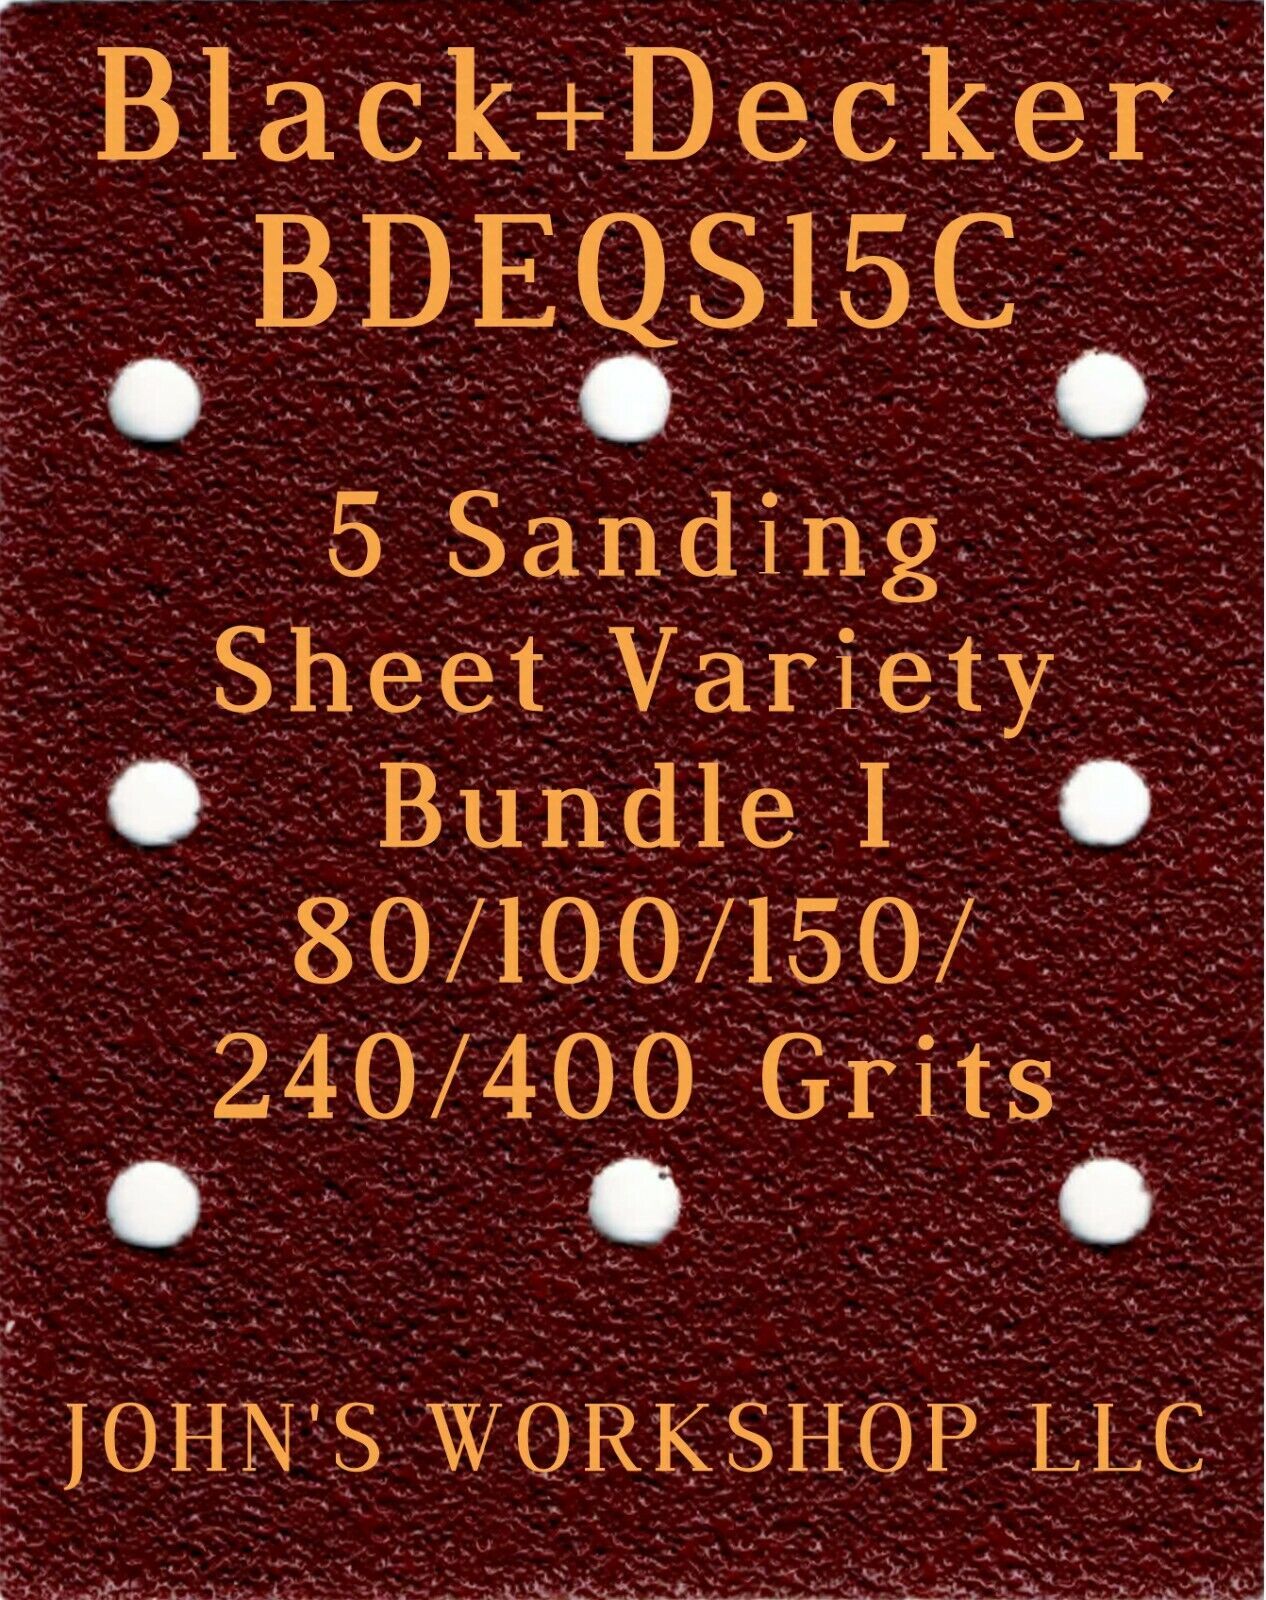 Black+Decker BDEQS15C - 80/100/150/240/400 Grits - 5 Sandpaper Variety Bundle I - £4.00 GBP